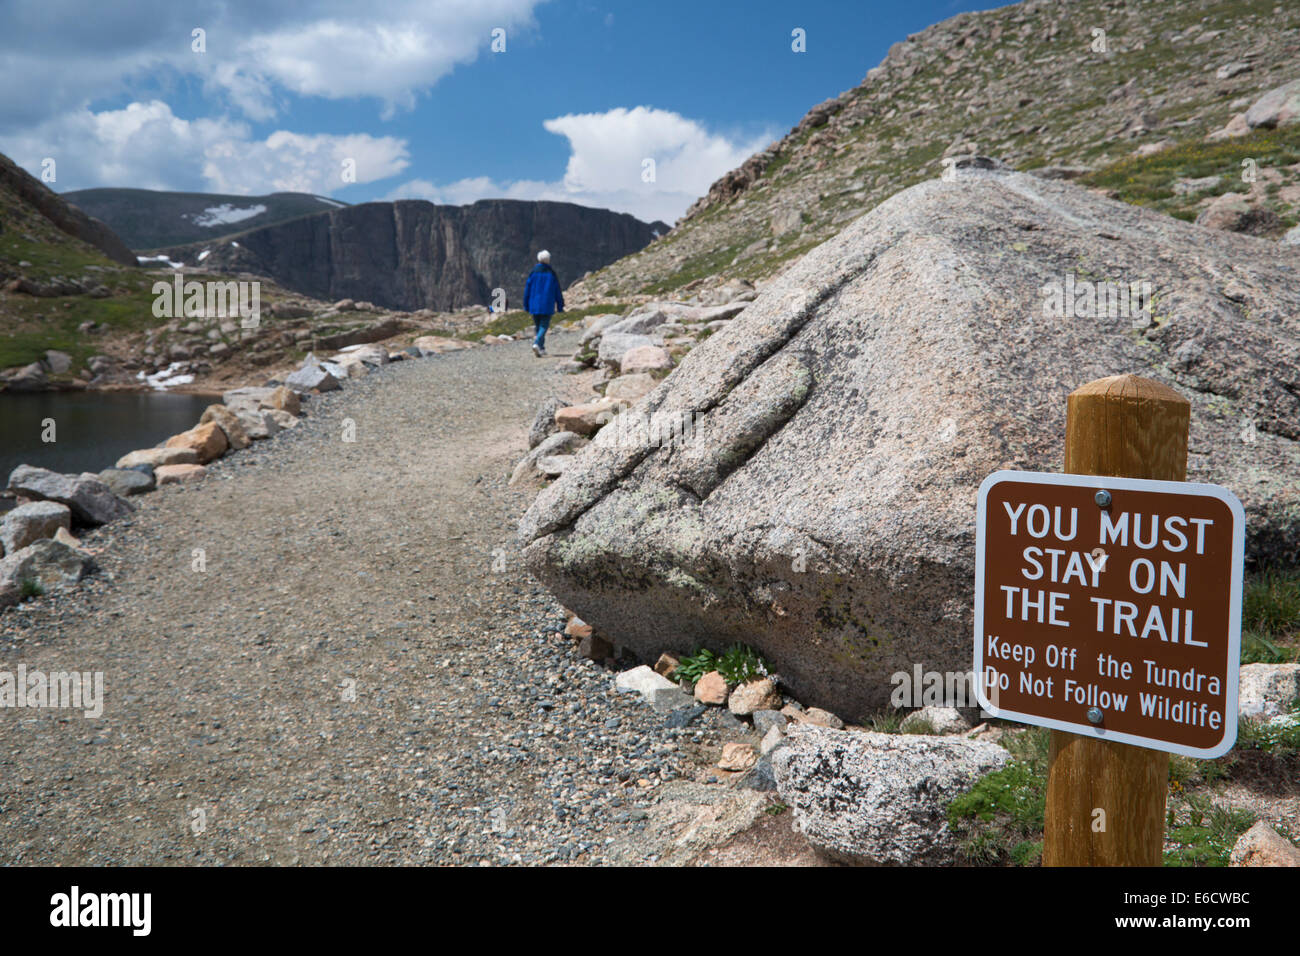 Idaho Springs, Colorado - A hiker on a trail near Summit Lake on Mt. Evans. Stock Photo